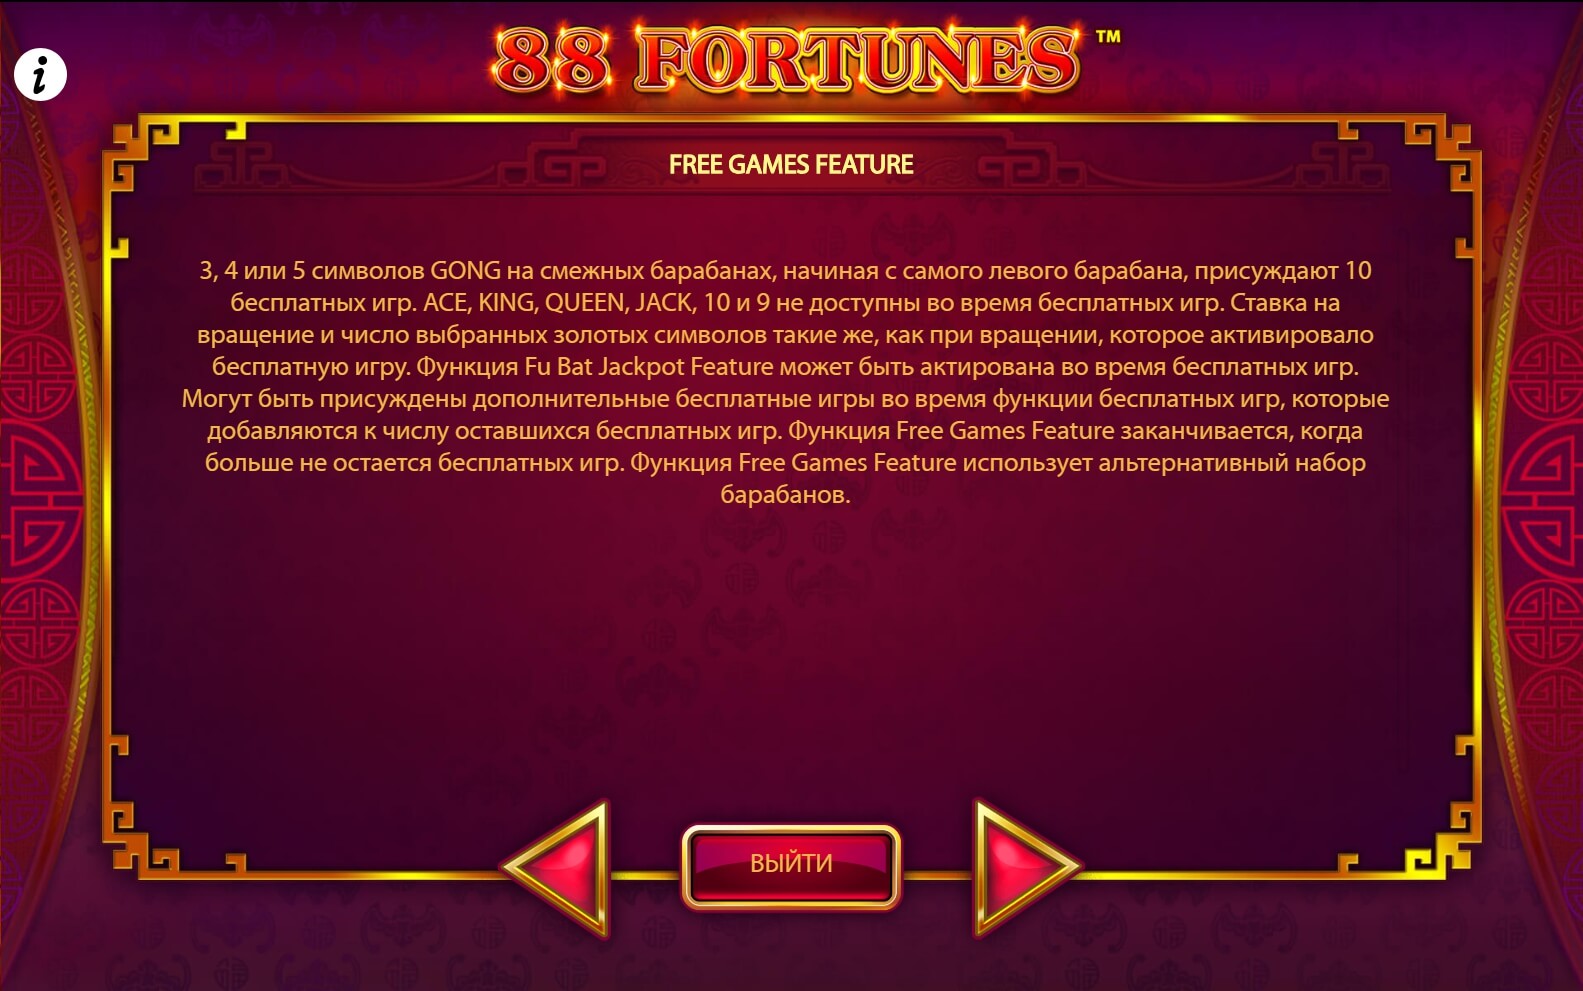 88 fortunes slot machine detail image 1